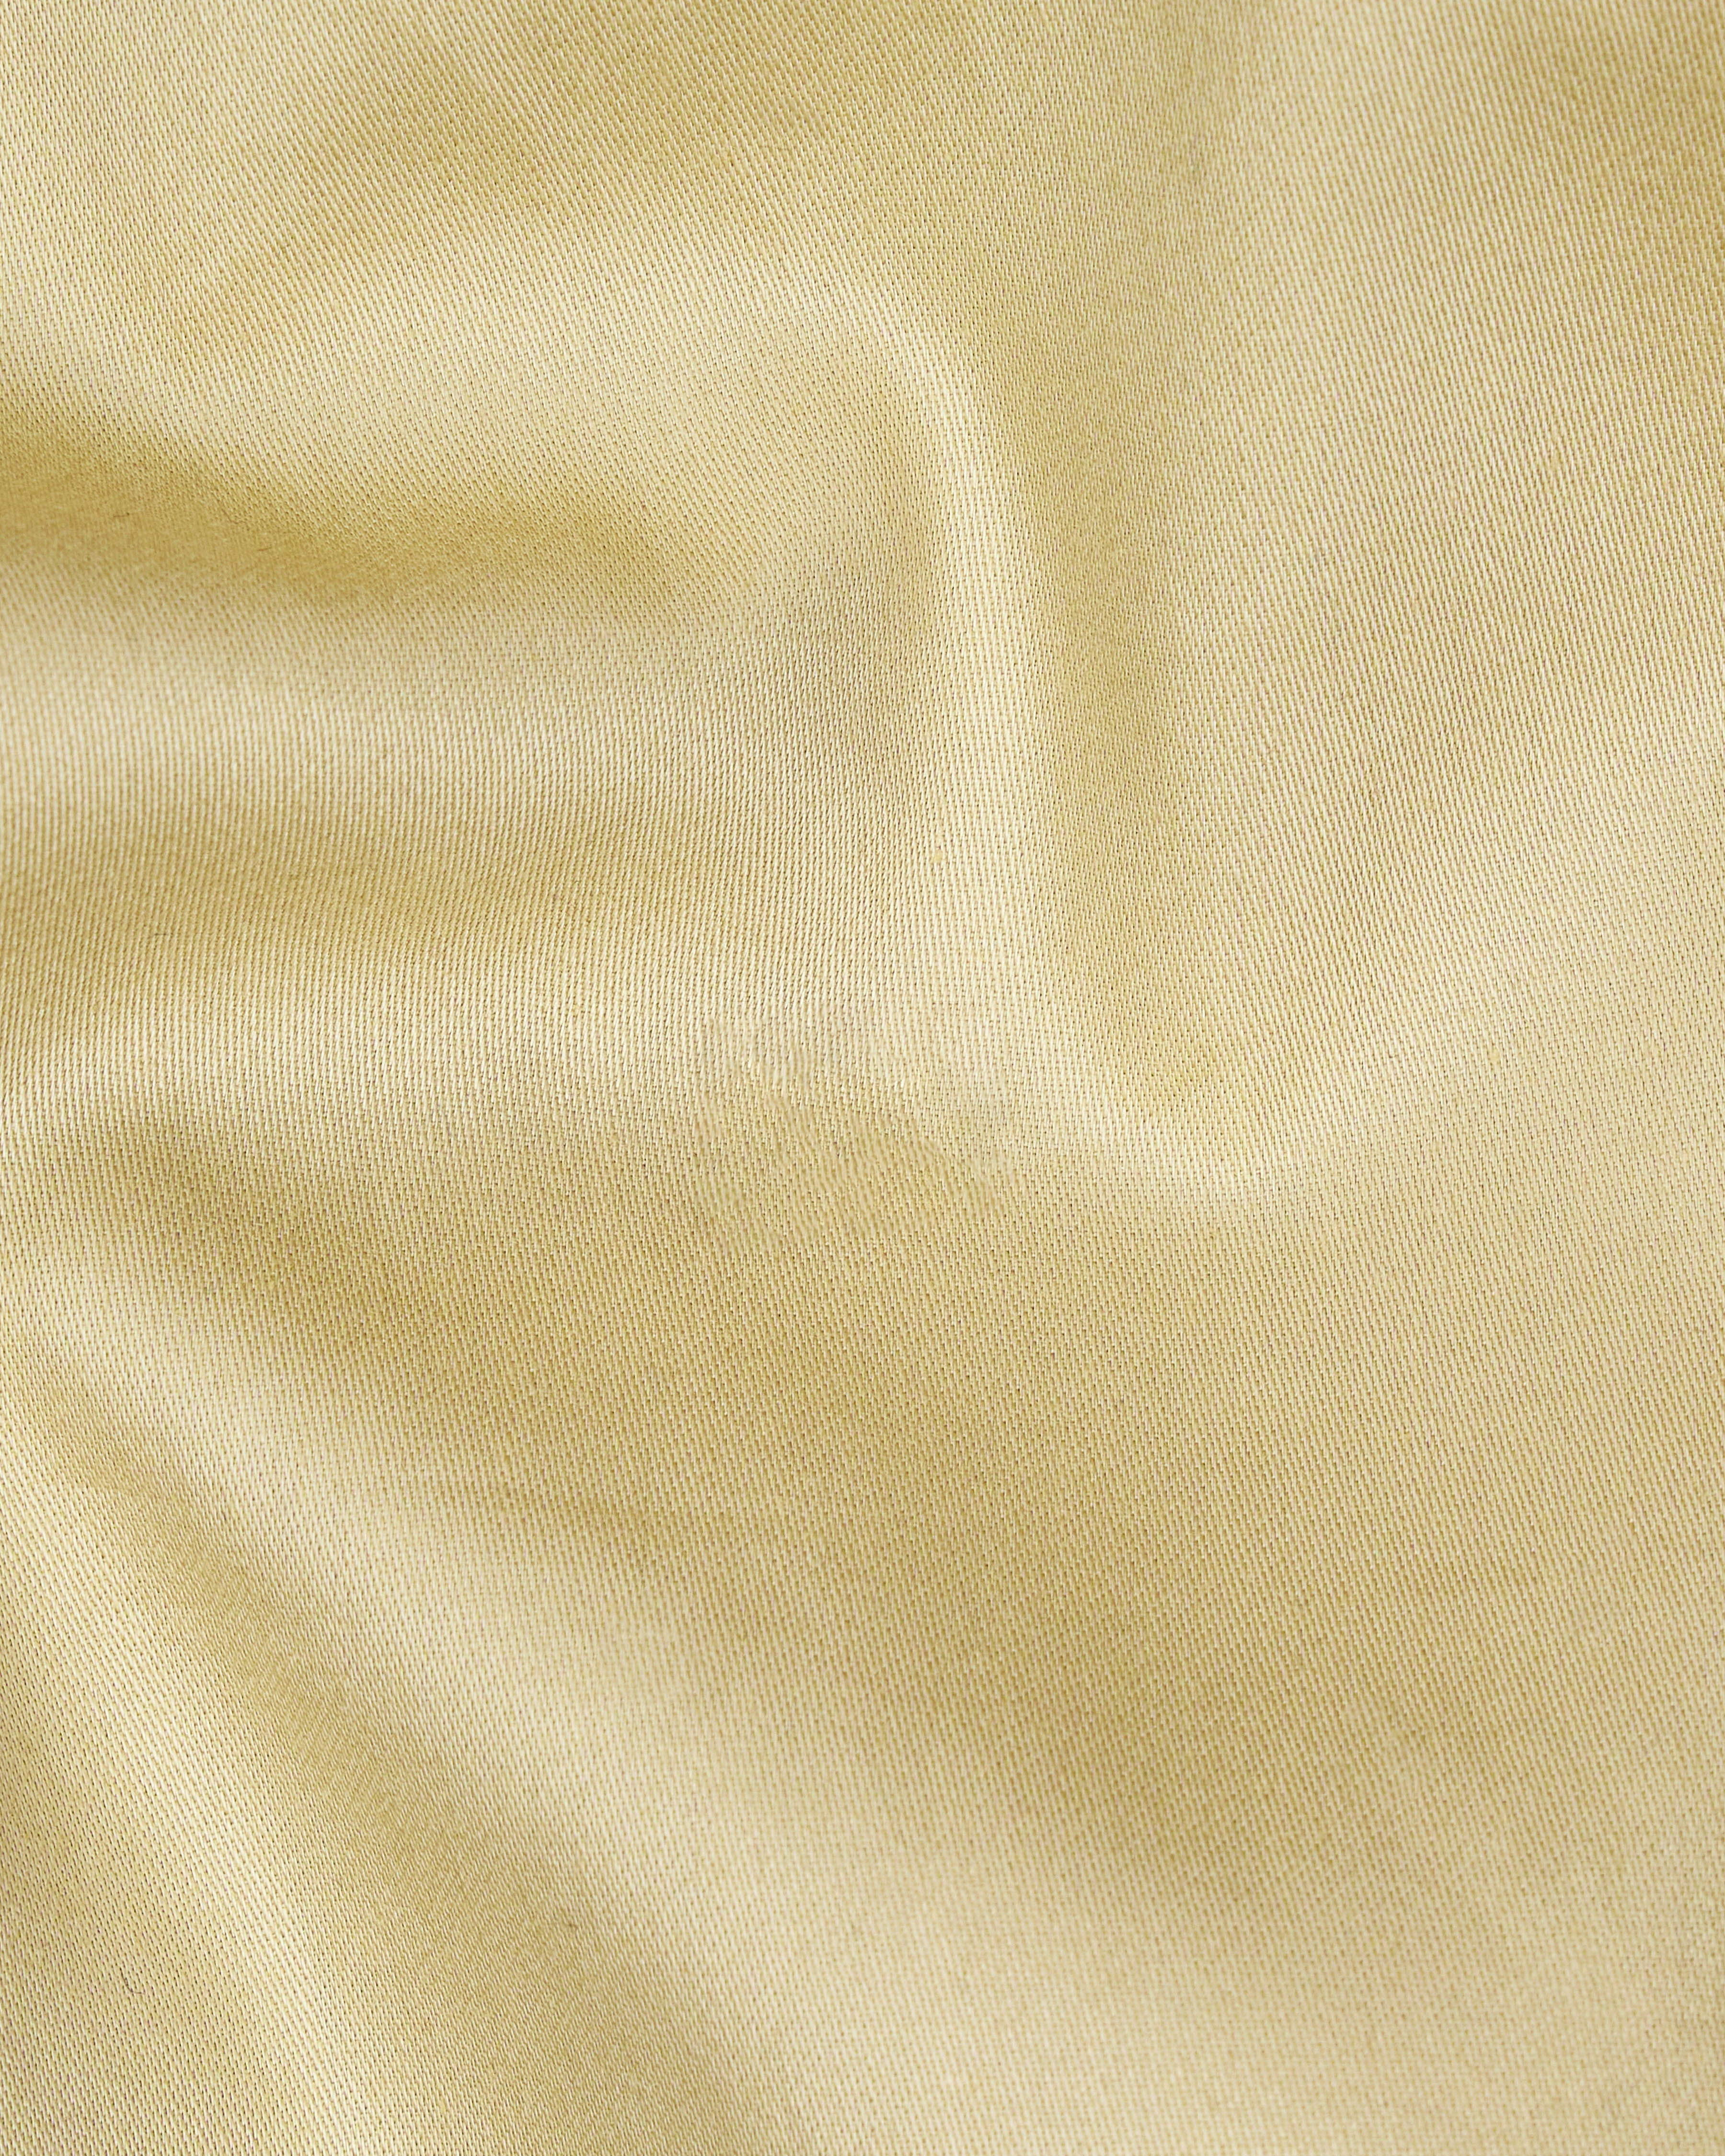 Thistle Brown with Rabbit Subtle Sheen Embroidered Super Soft Premium Cotton Shirt 8720-E008-38, 8720-E008-H-38, 8720-E008-39, 8720-E008-H-39, 8720-E008-40, 8720-E008-H-40, 8720-E008-42, 8720-E008-H-42, 8720-E008-44, 8720-E008-H-44, 8720-E008-46, 8720-E008-H-46, 8720-E008-48, 8720-E008-H-48, 8720-E008-50, 8720-E008-H-50, 8720-E008-52, 8720-E008-H-52